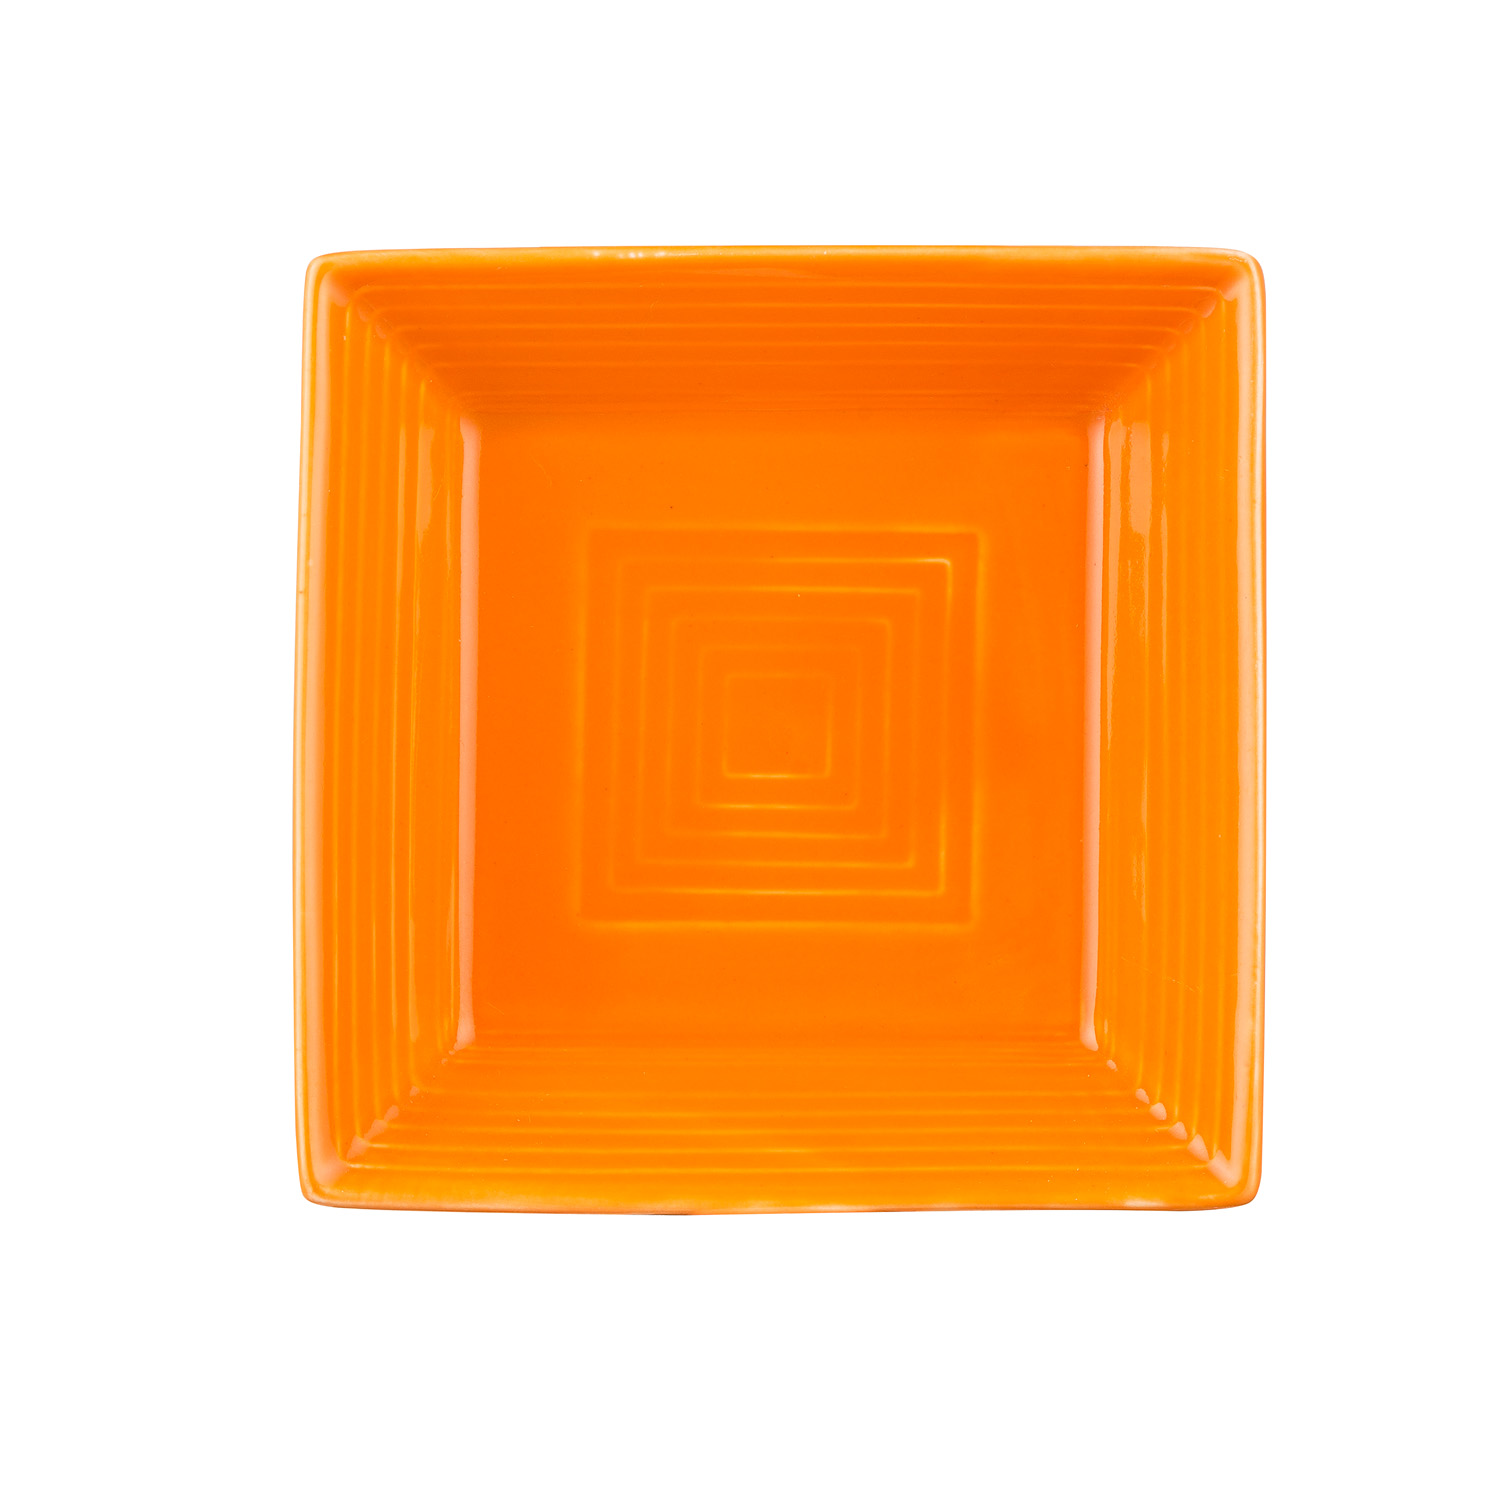 CAC China TG-SQ16-TNG Tango Embossed Porcelain Tangerine Square Plate 10"  - 1 dozen